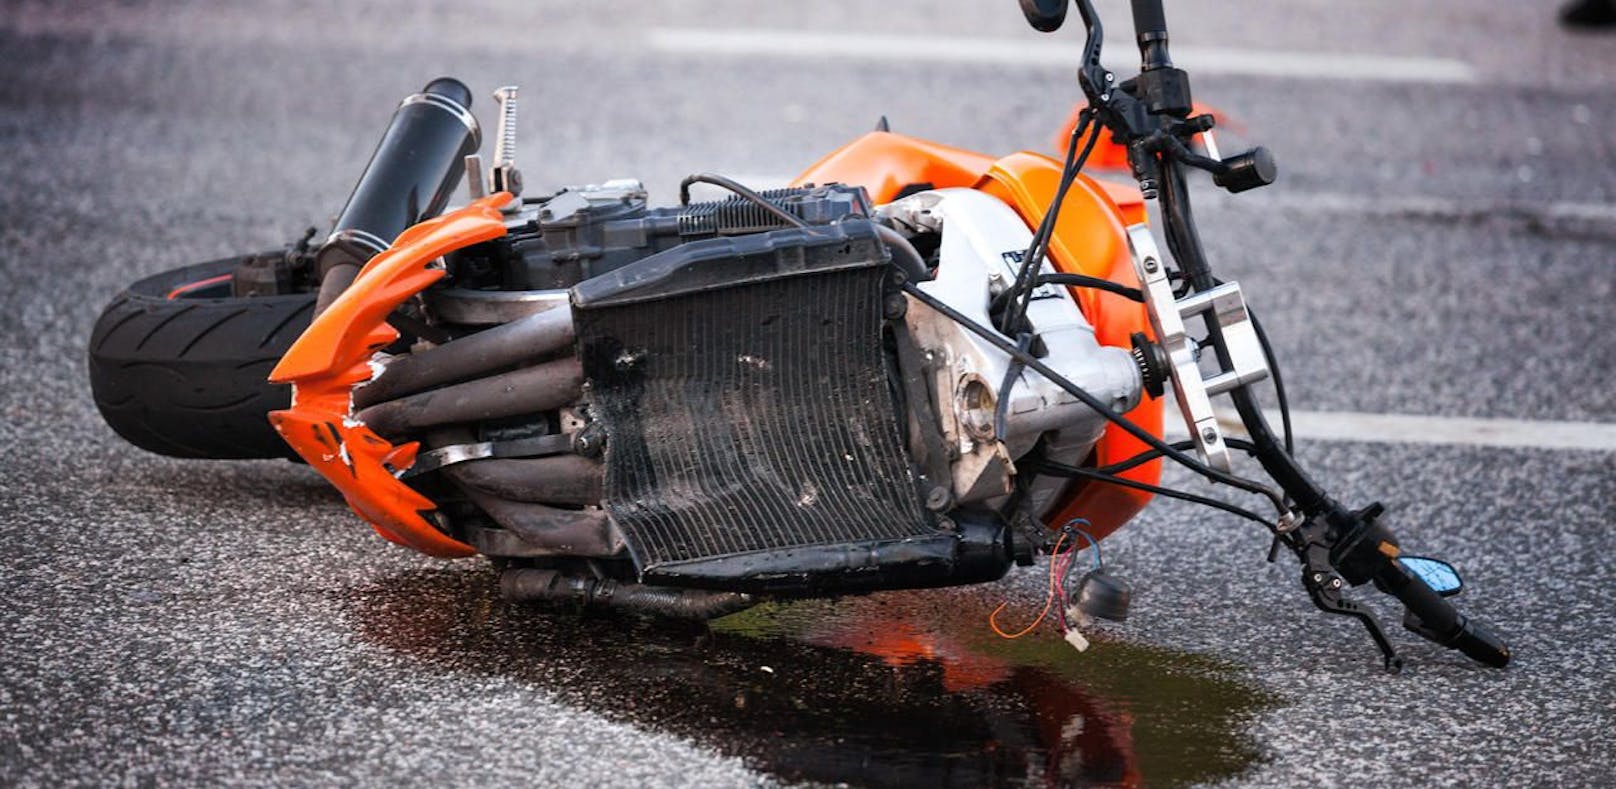 Das Motorrad wurde bei dem Unfall völlig zerstört. (Symbolbild)